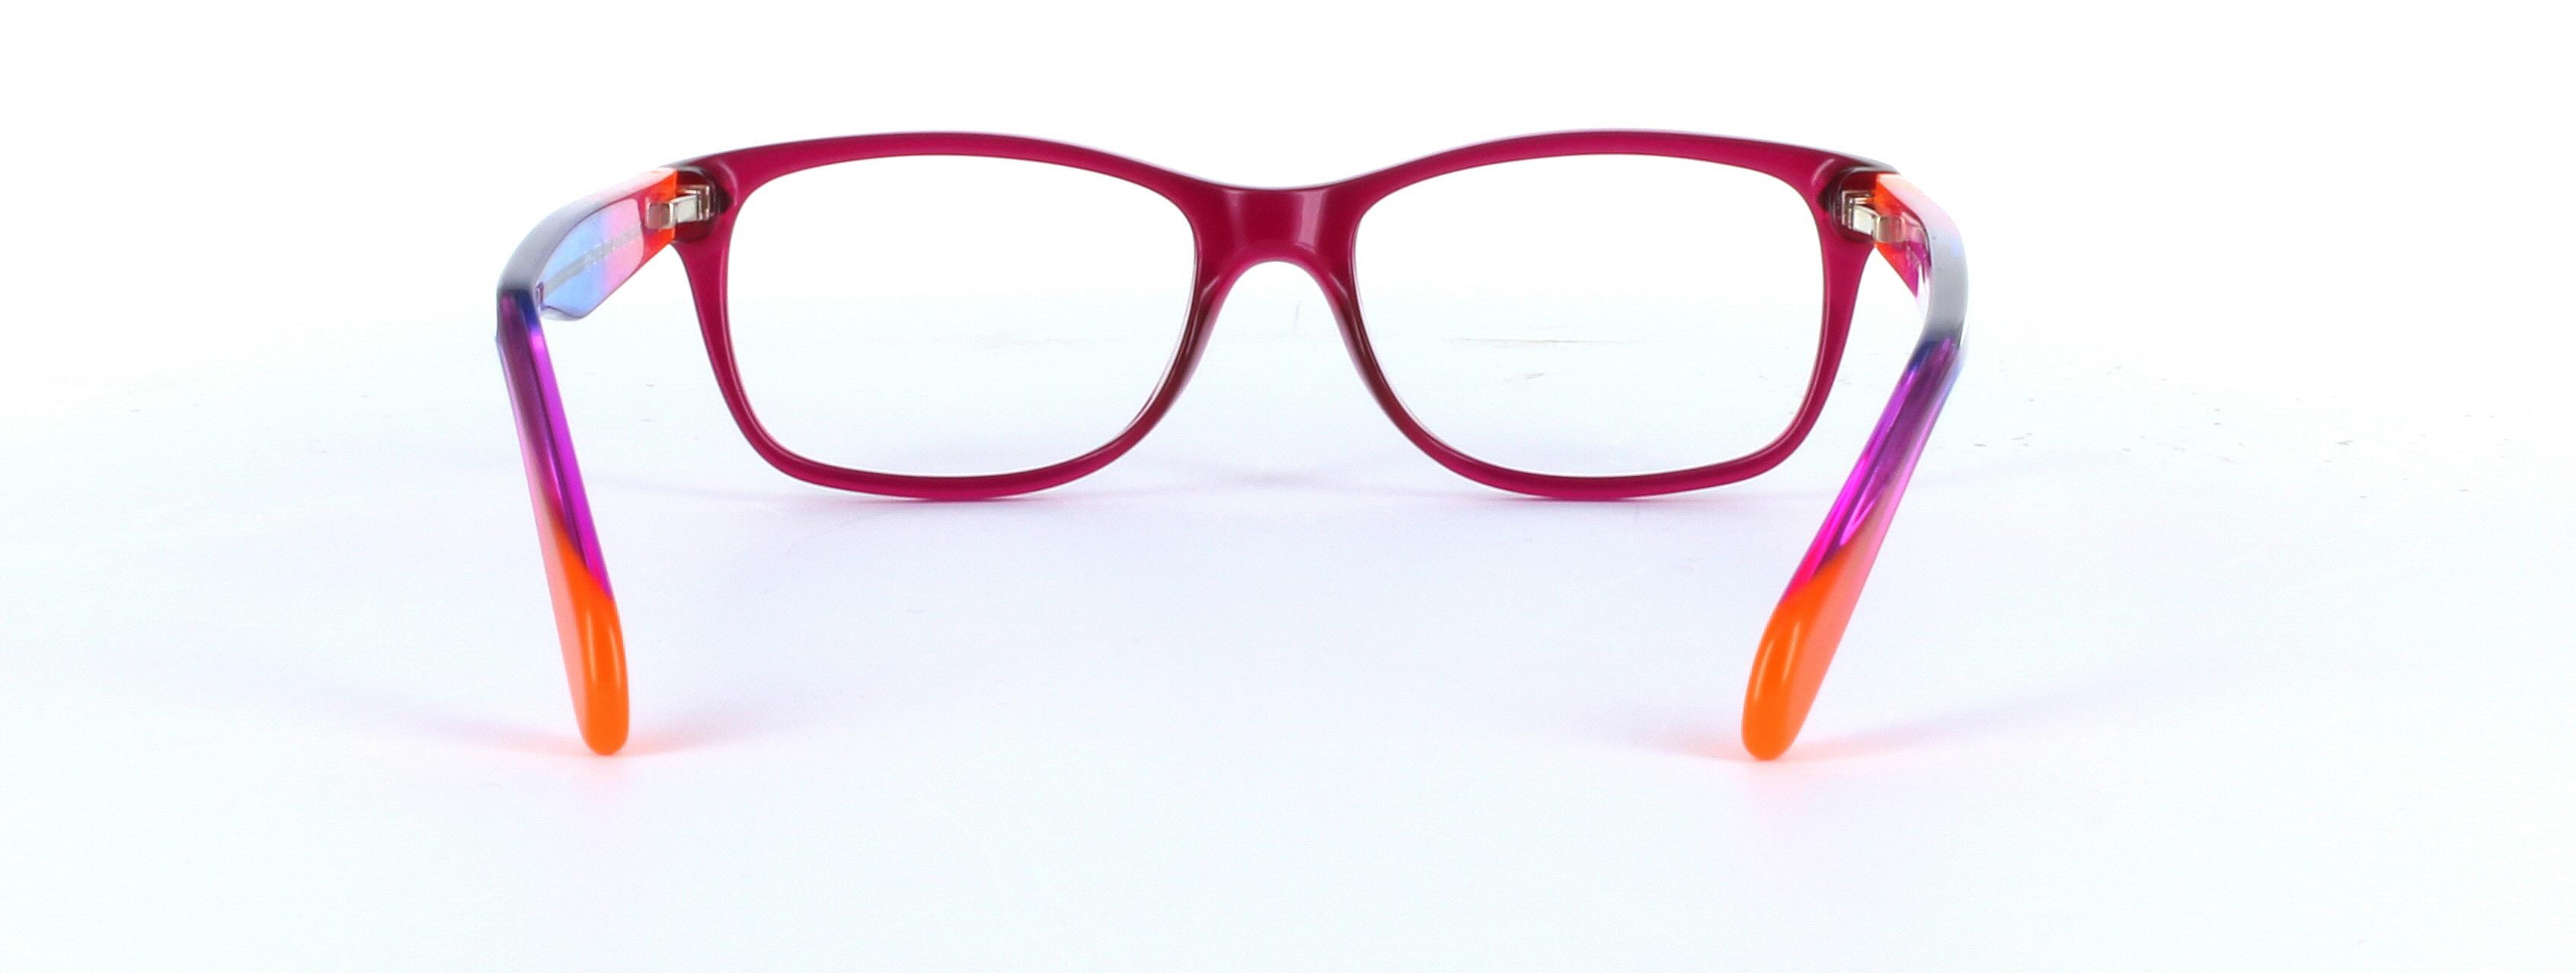 Olivia Purple Full Rim Oval Plastic Glasses - Image View 3